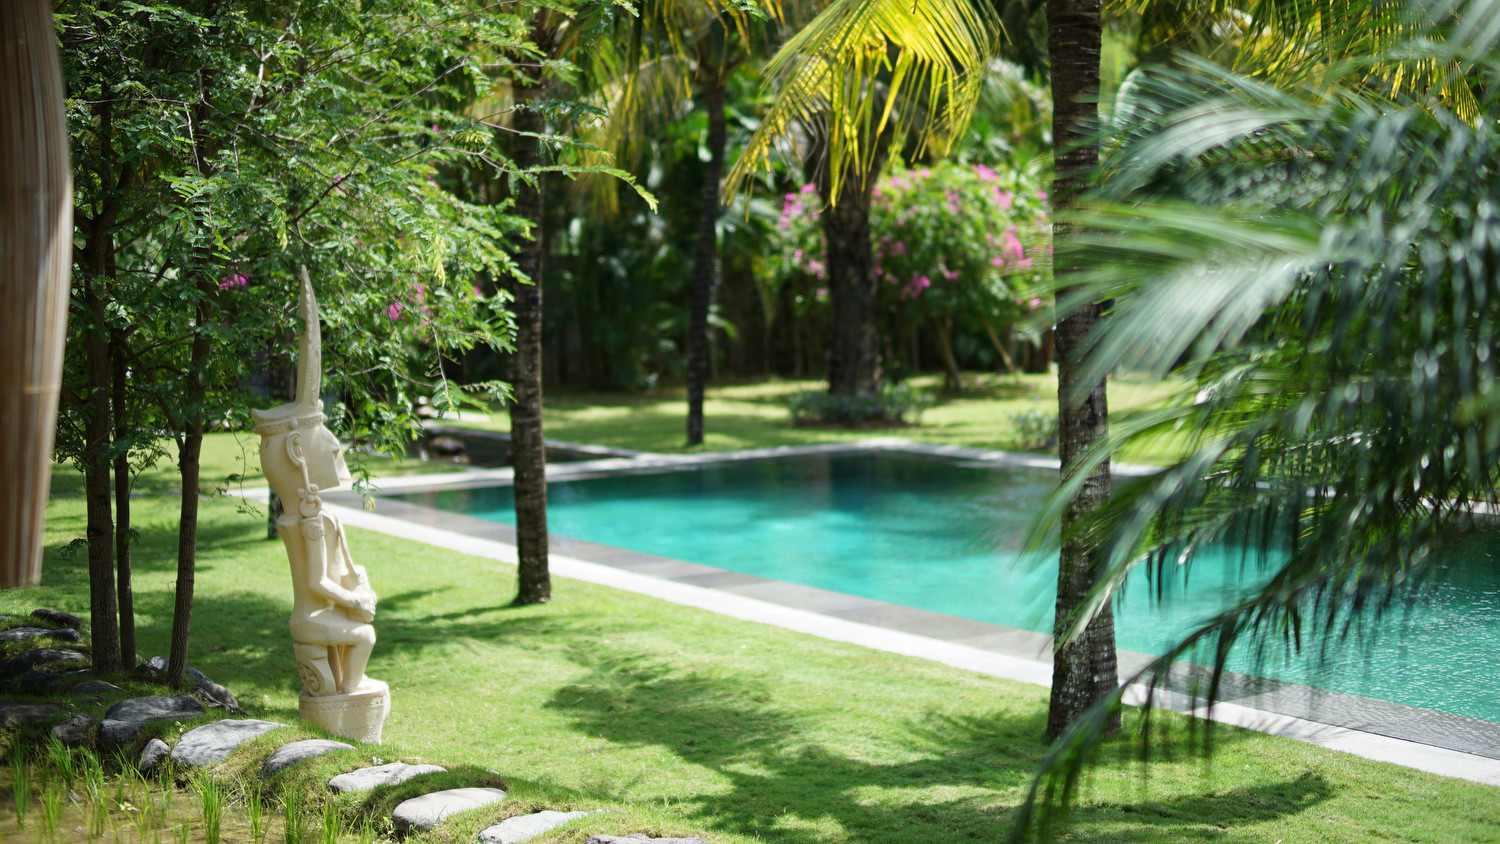  Villa  Kayu  in Umalas Bali  5 bedrooms Best Price 